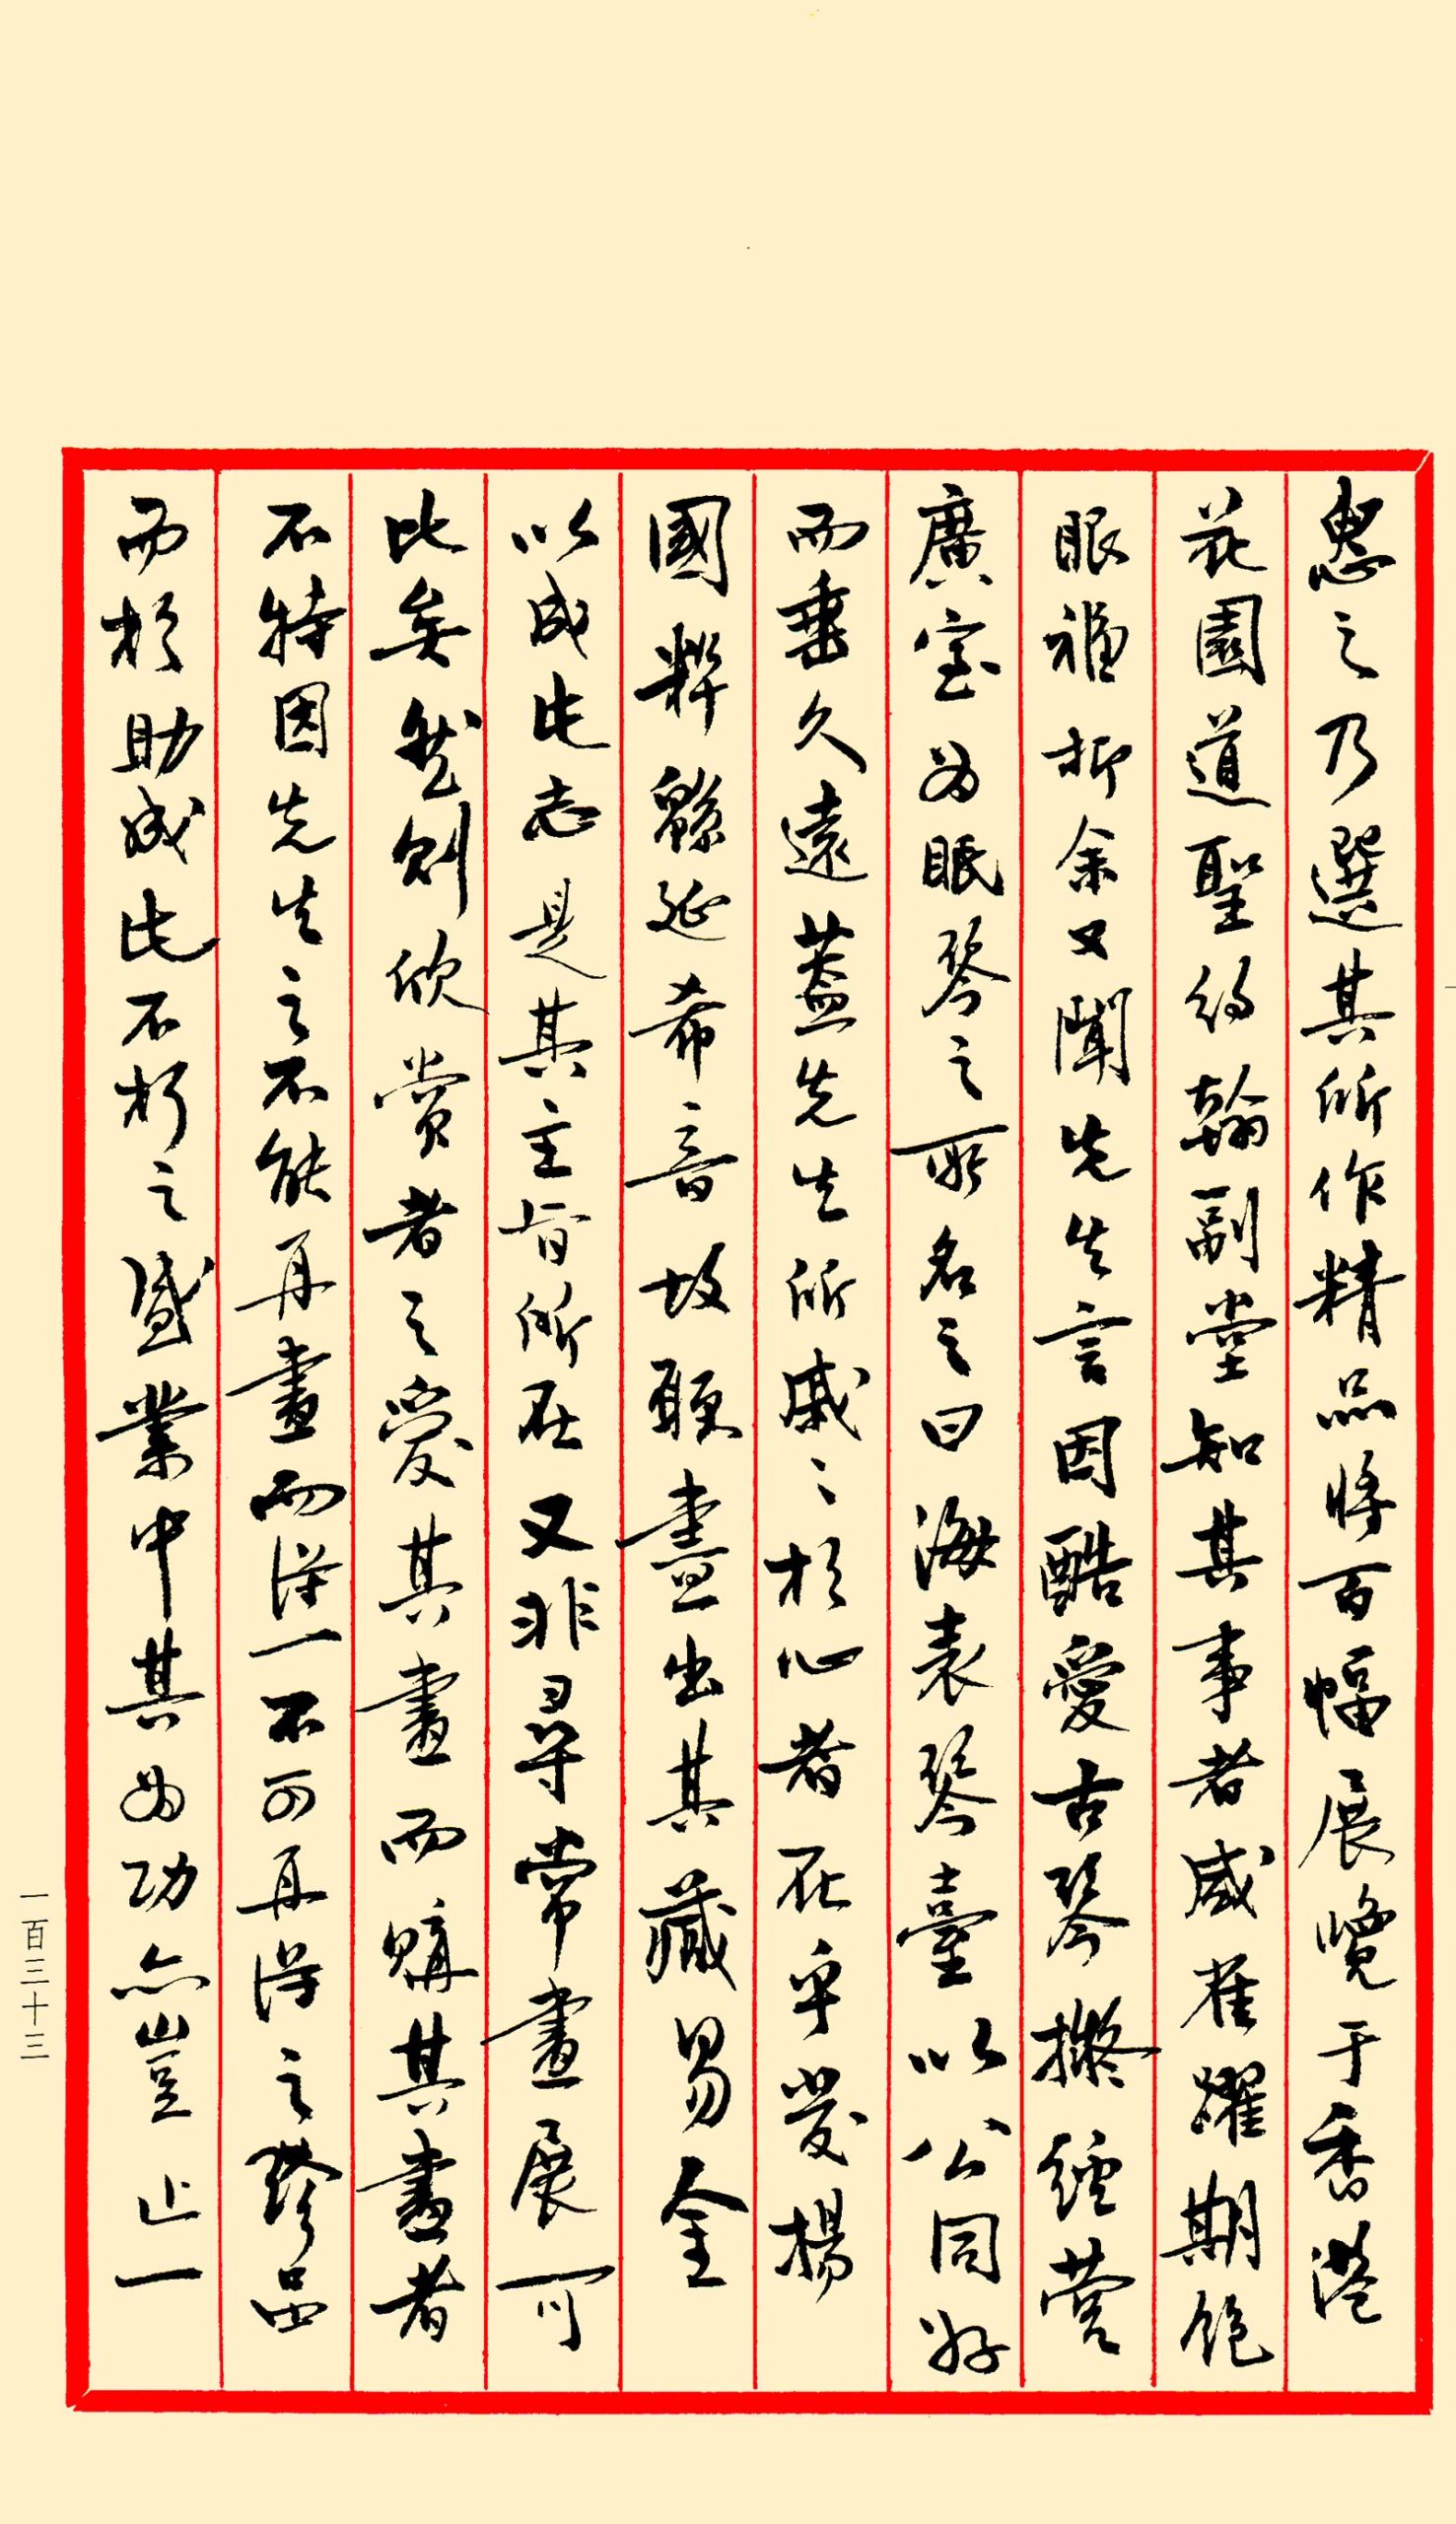 Manuscrit de Cai laoshi, page 3